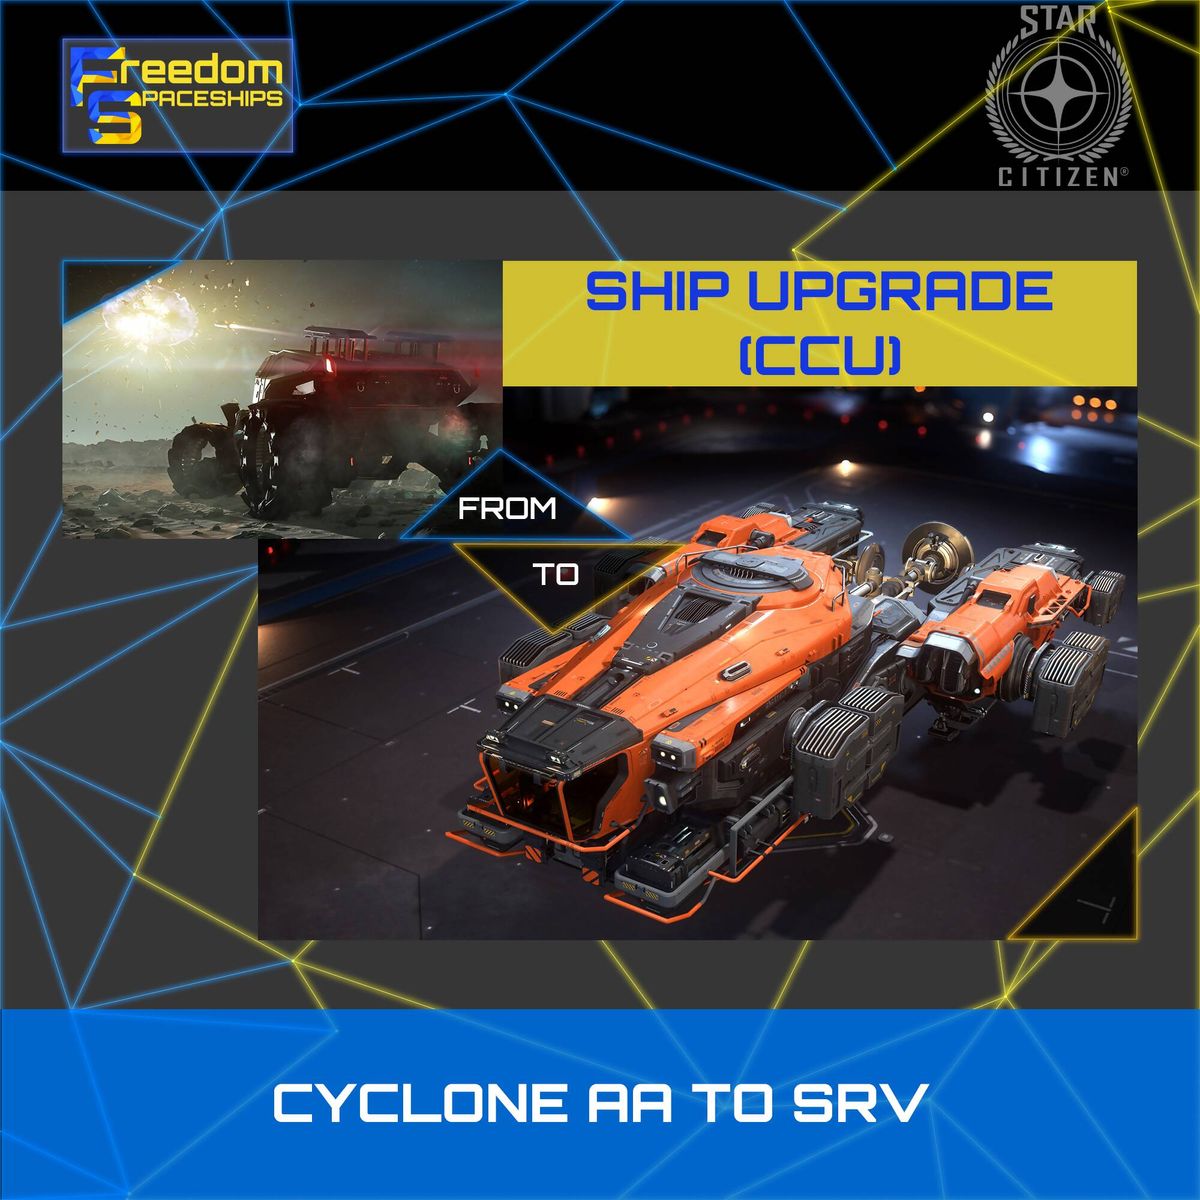 Upgrade - Cyclone AA to SRV